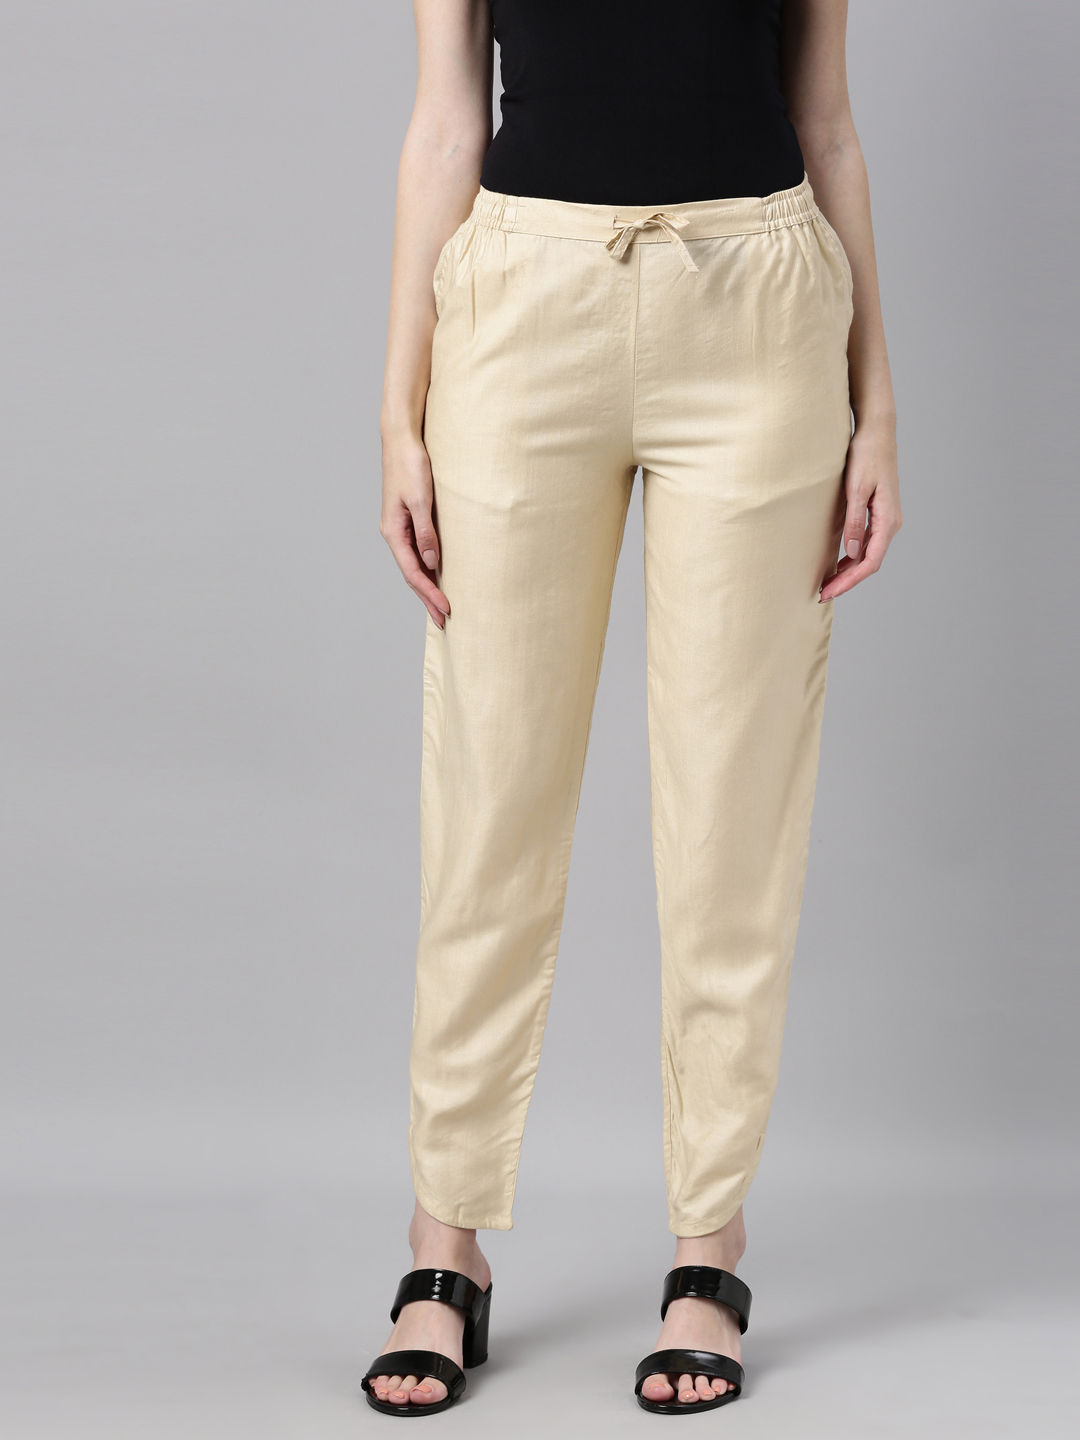 Cotton Trousers  Buy Cotton Pant  Trouser Online  Myntra